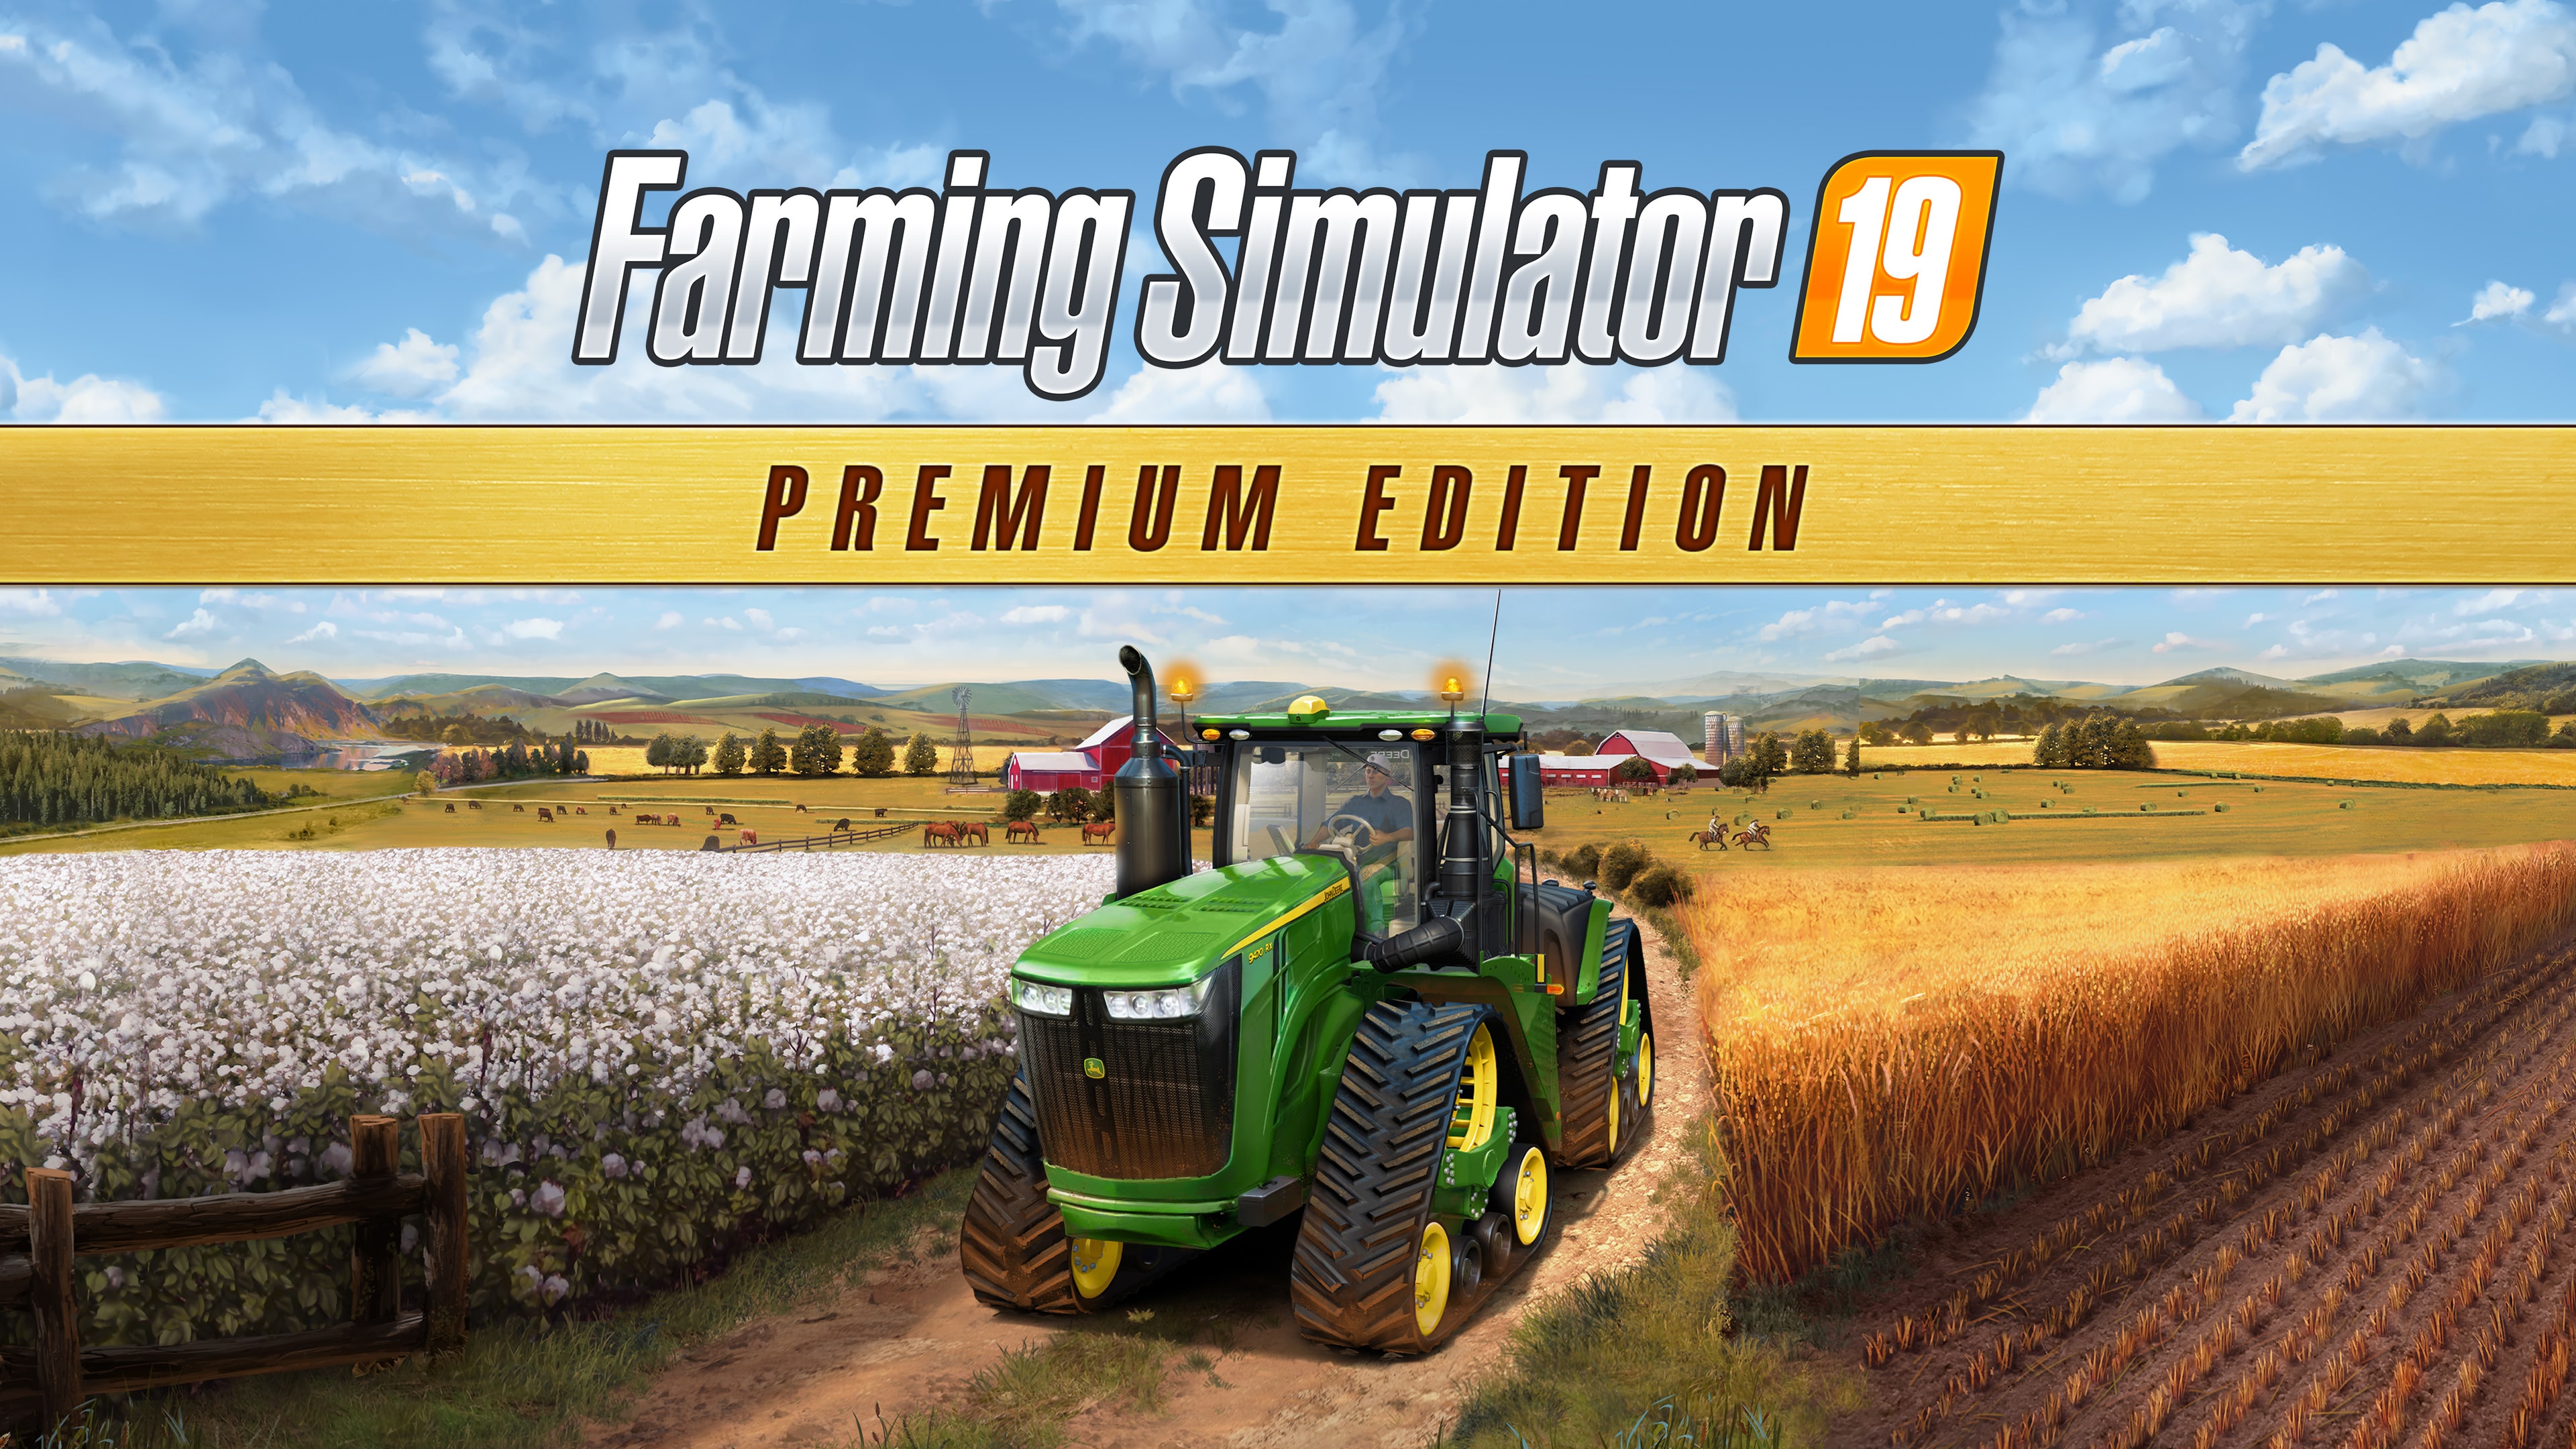 belediging rek Verrassend genoeg Farming Simulator 19 - Premium Edition